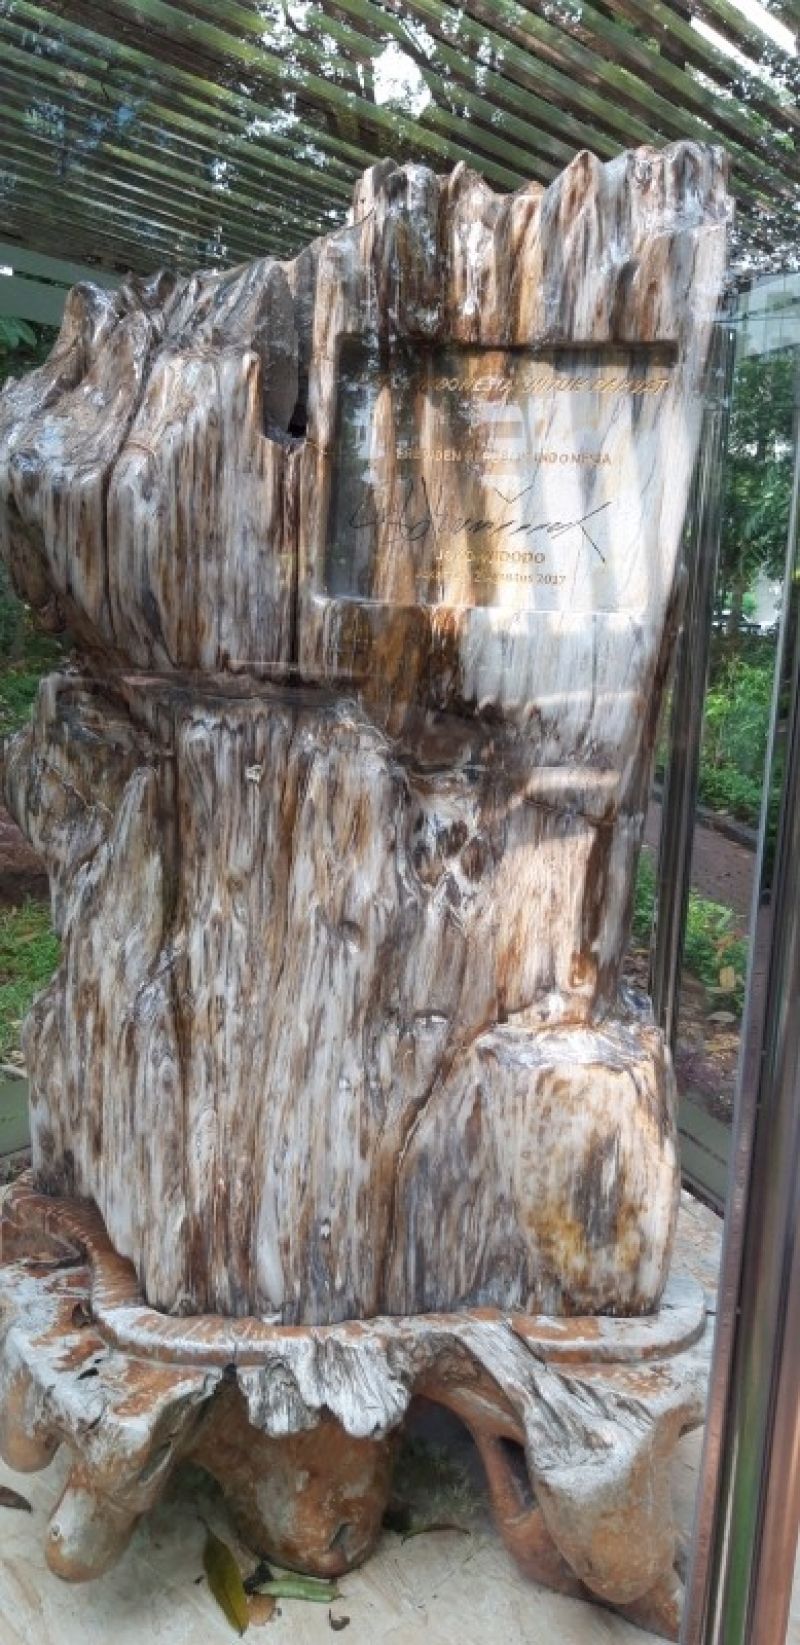 Fosil kayu di area Arboretum